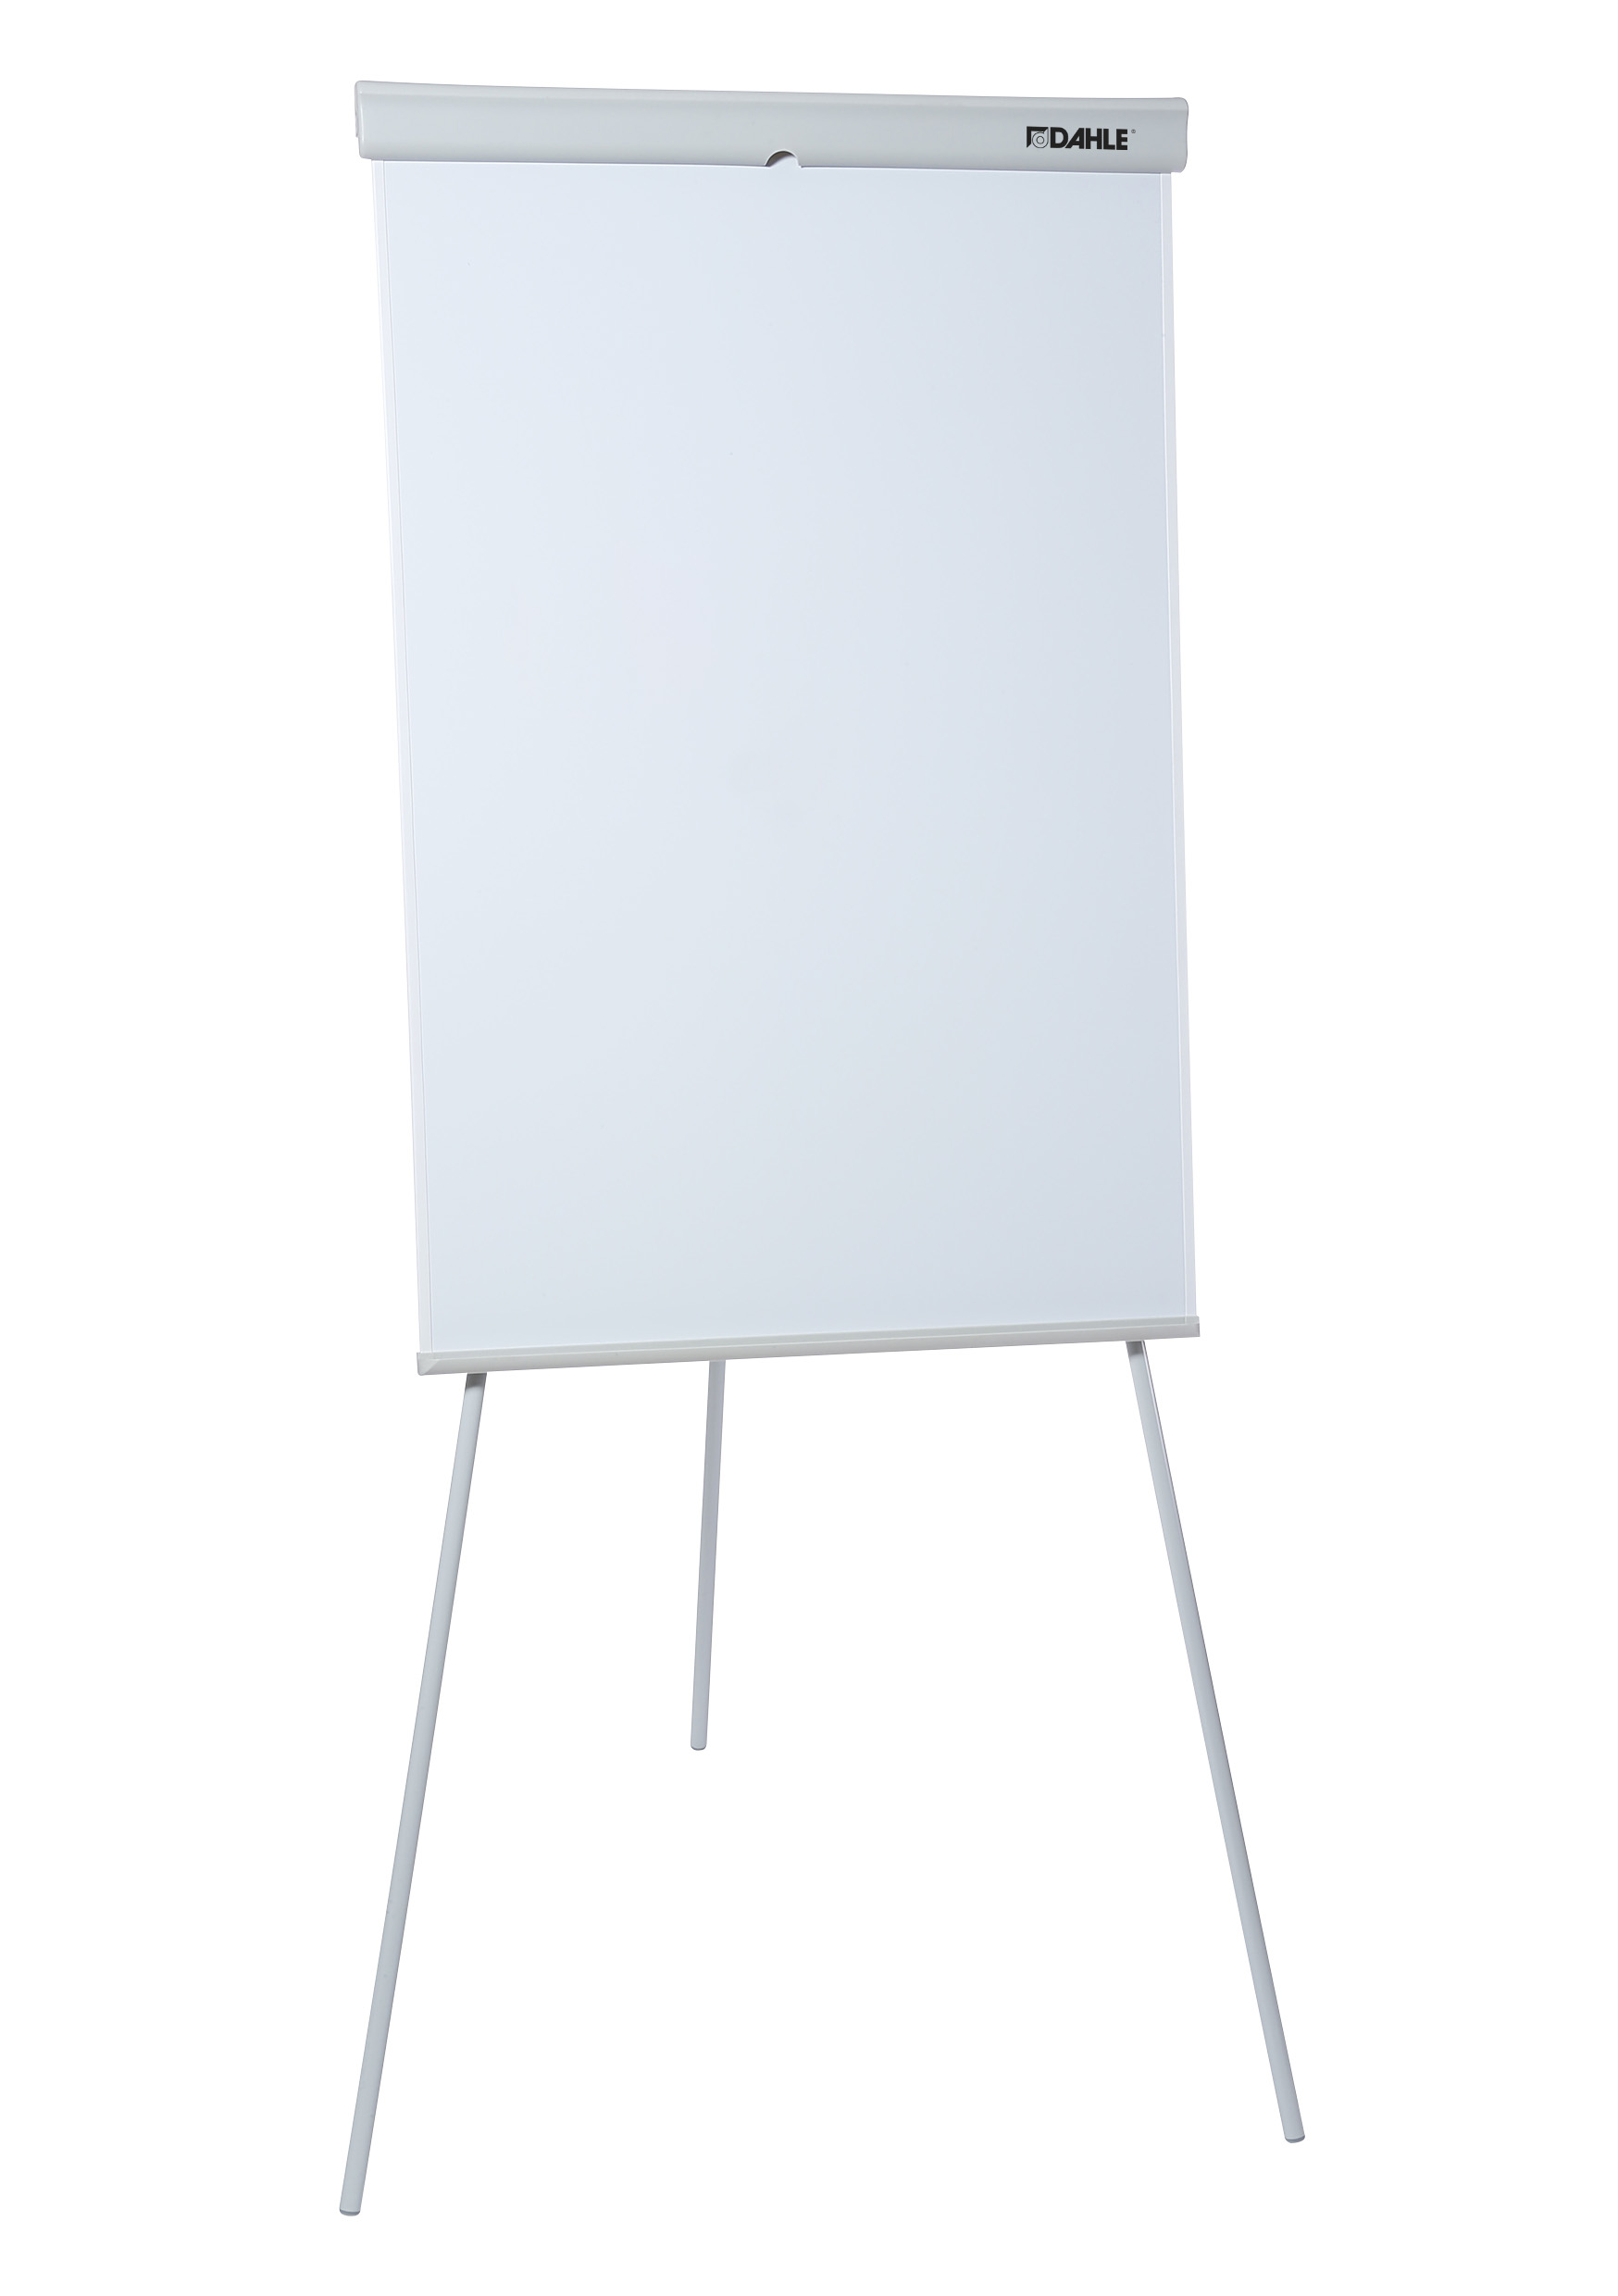 Metallic Tripod Flipchart Easel Stand - Whiteboard, Flip Chart